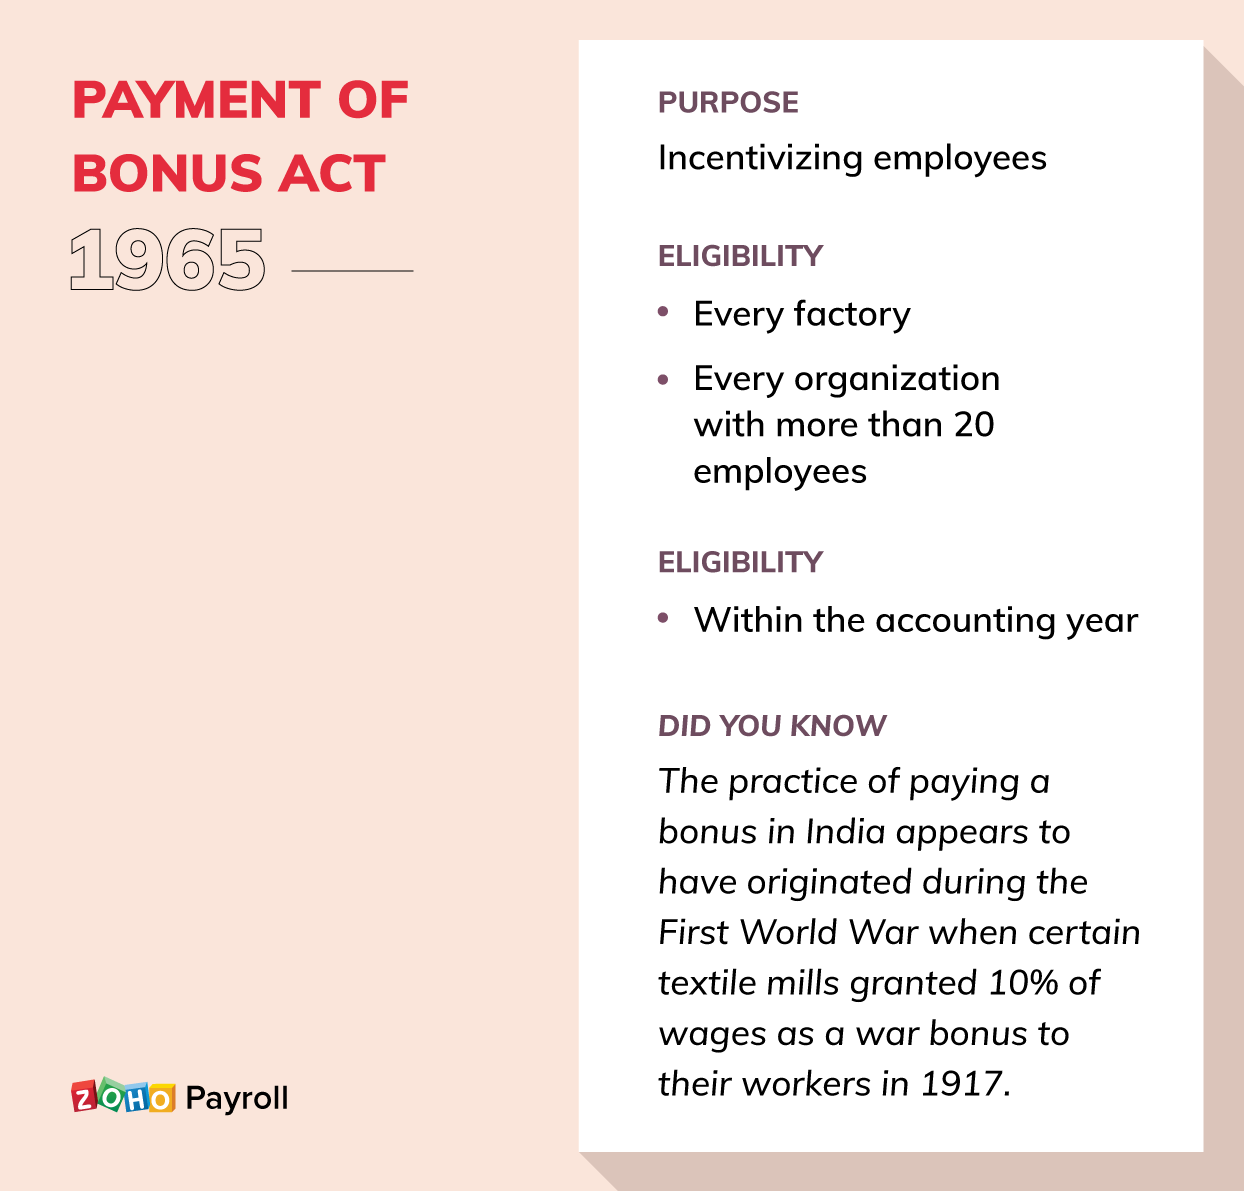 Payment of bonus act, 1965